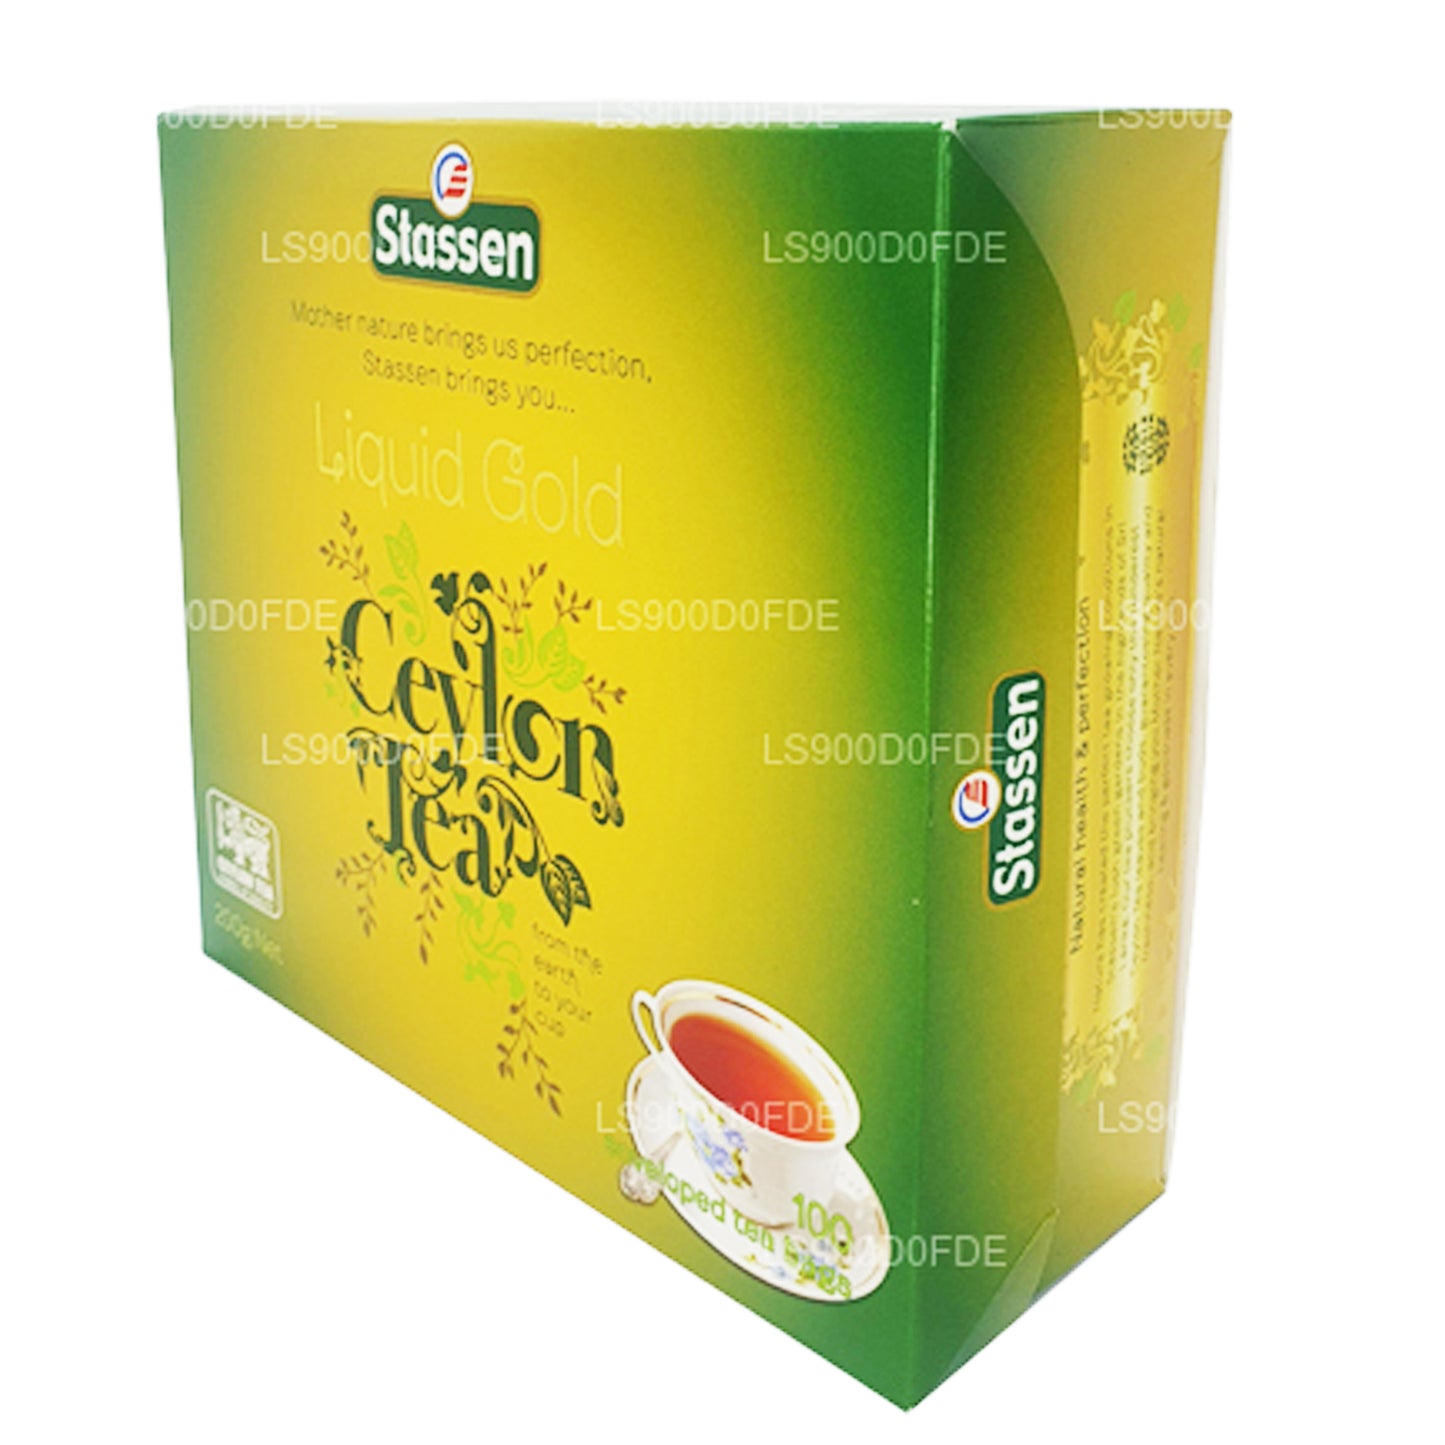 Stassen 液态金茶 (200 克) 100 个茶包